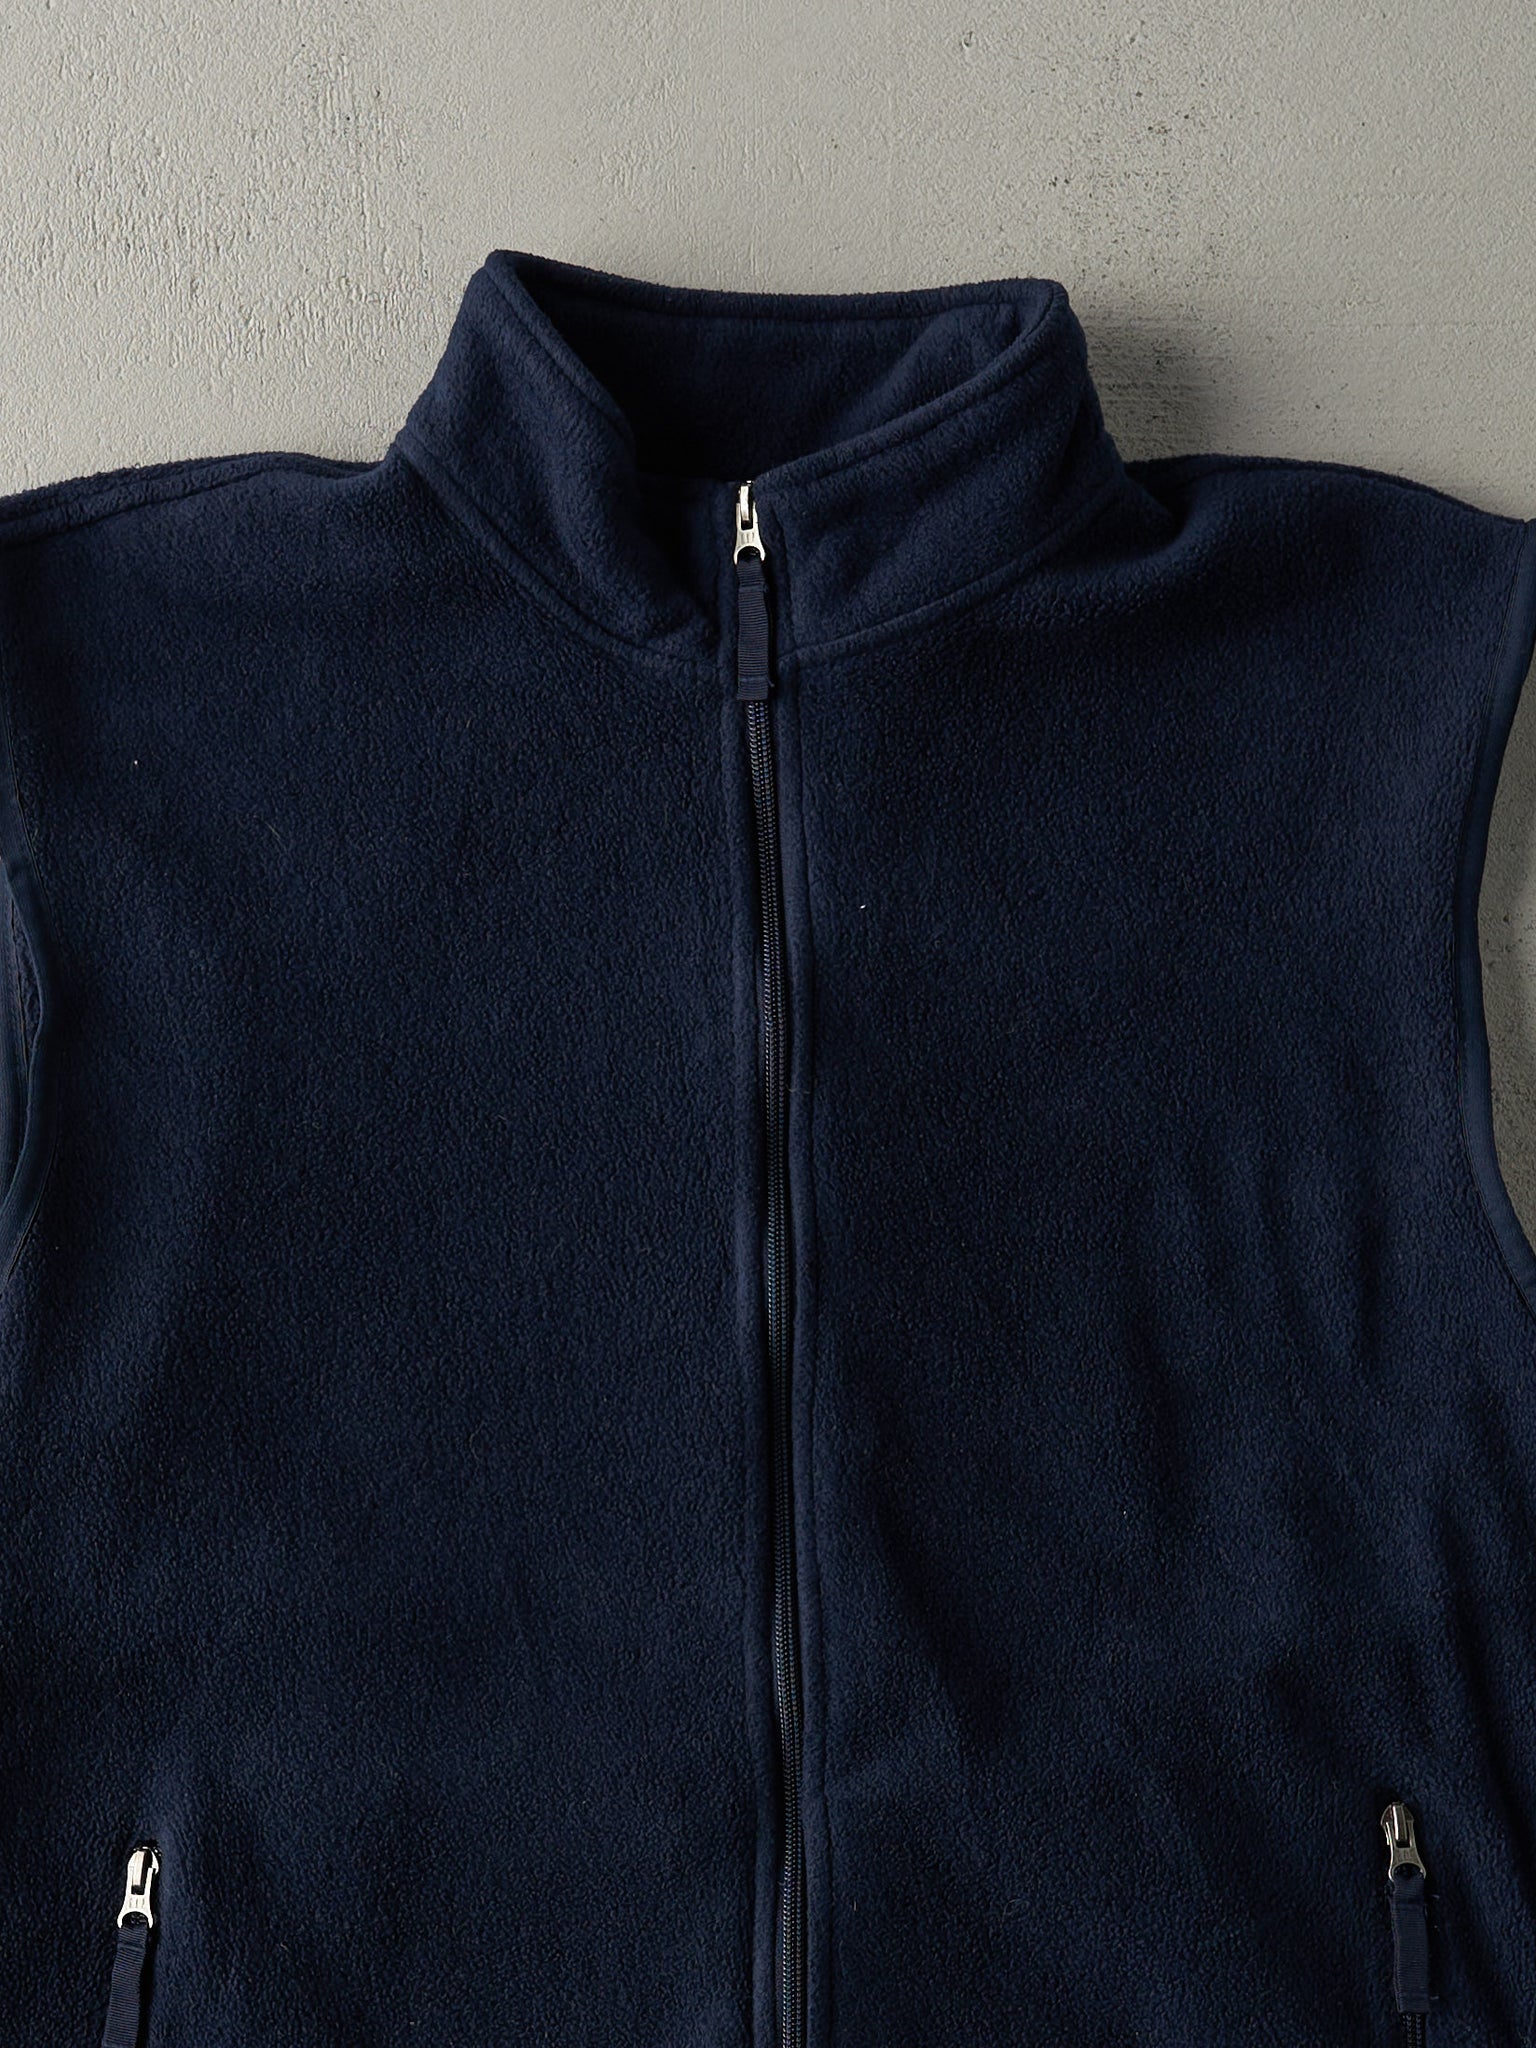 Vintage 90s Navy Blue Gap Fleece Vest (L)